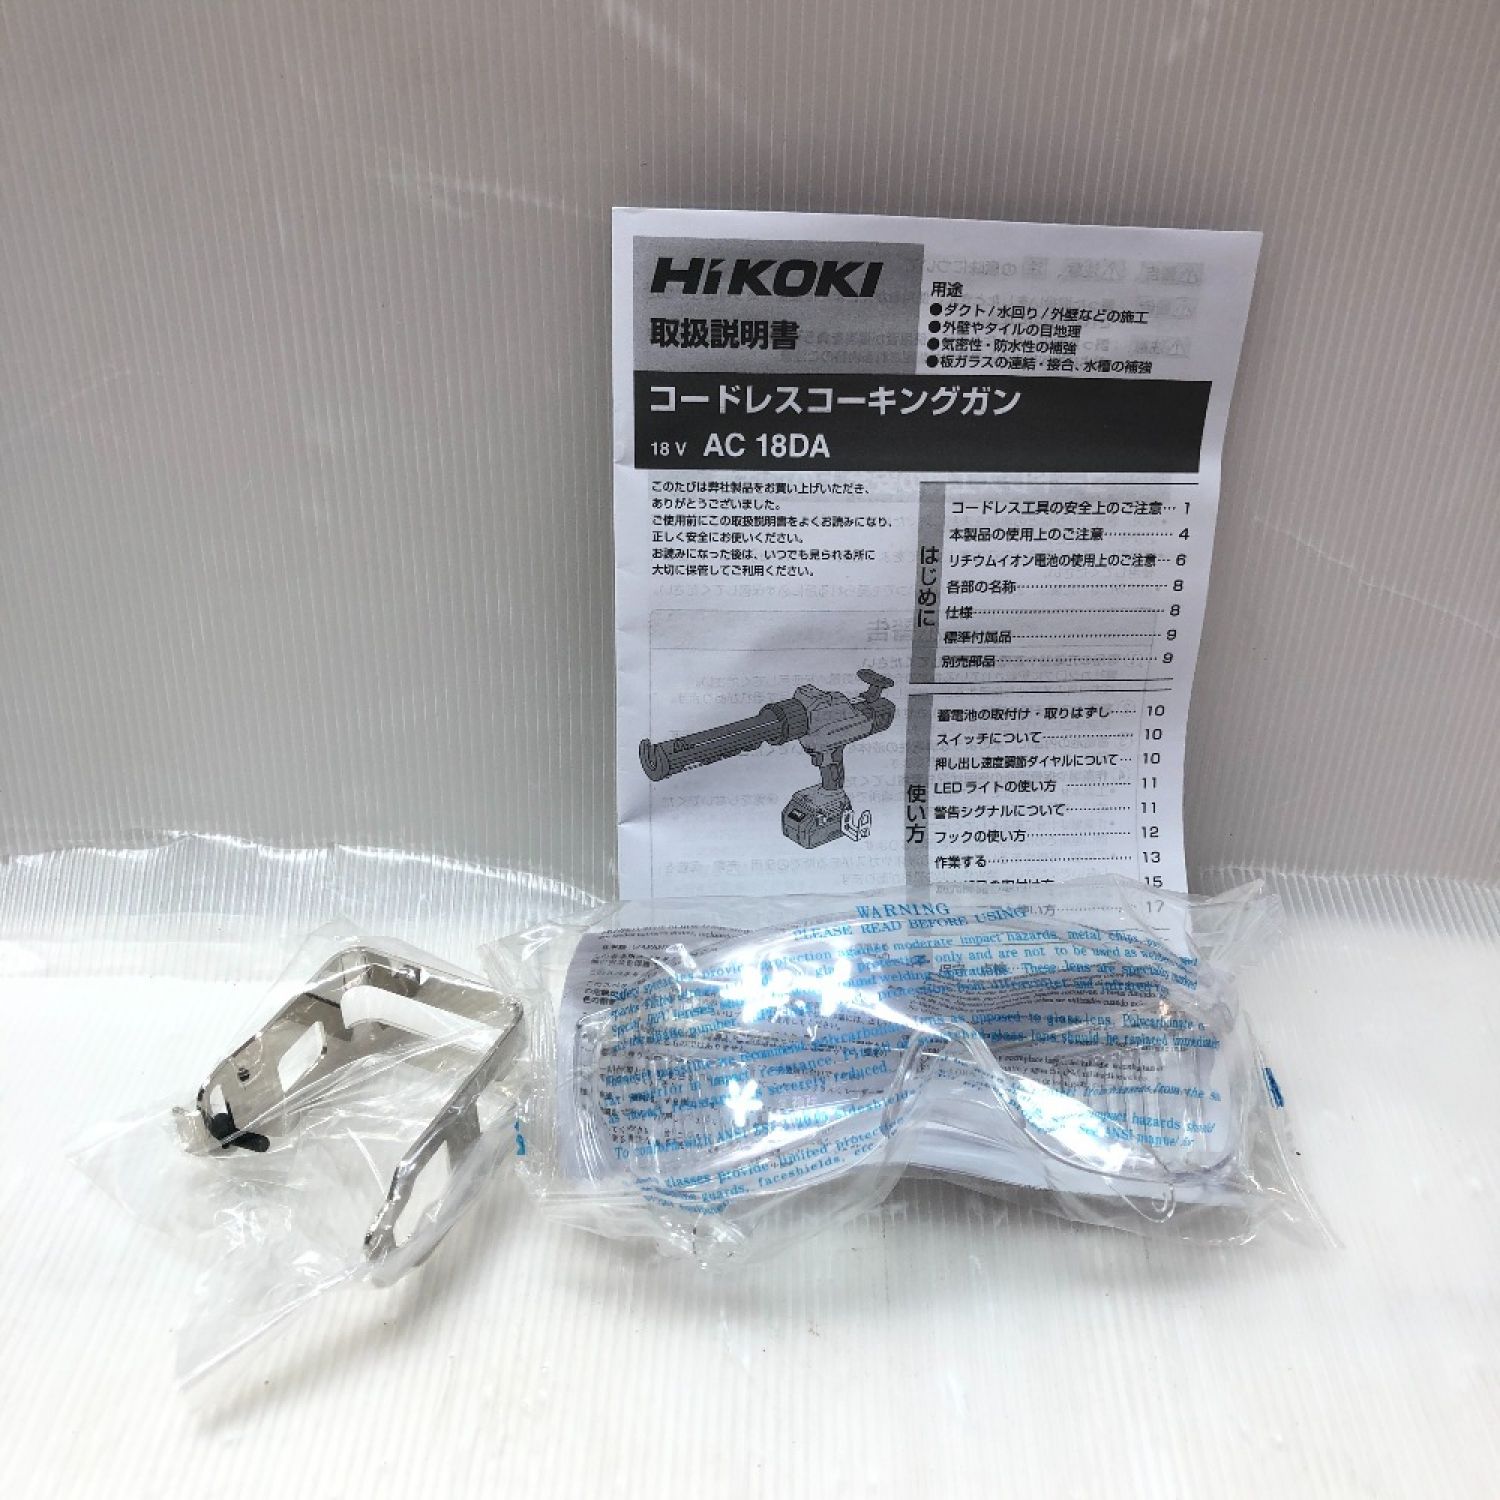 HiKOKI コードレスコーキングガン AC18DA (NN) (57803034) (蓄電池・充電器別売) 